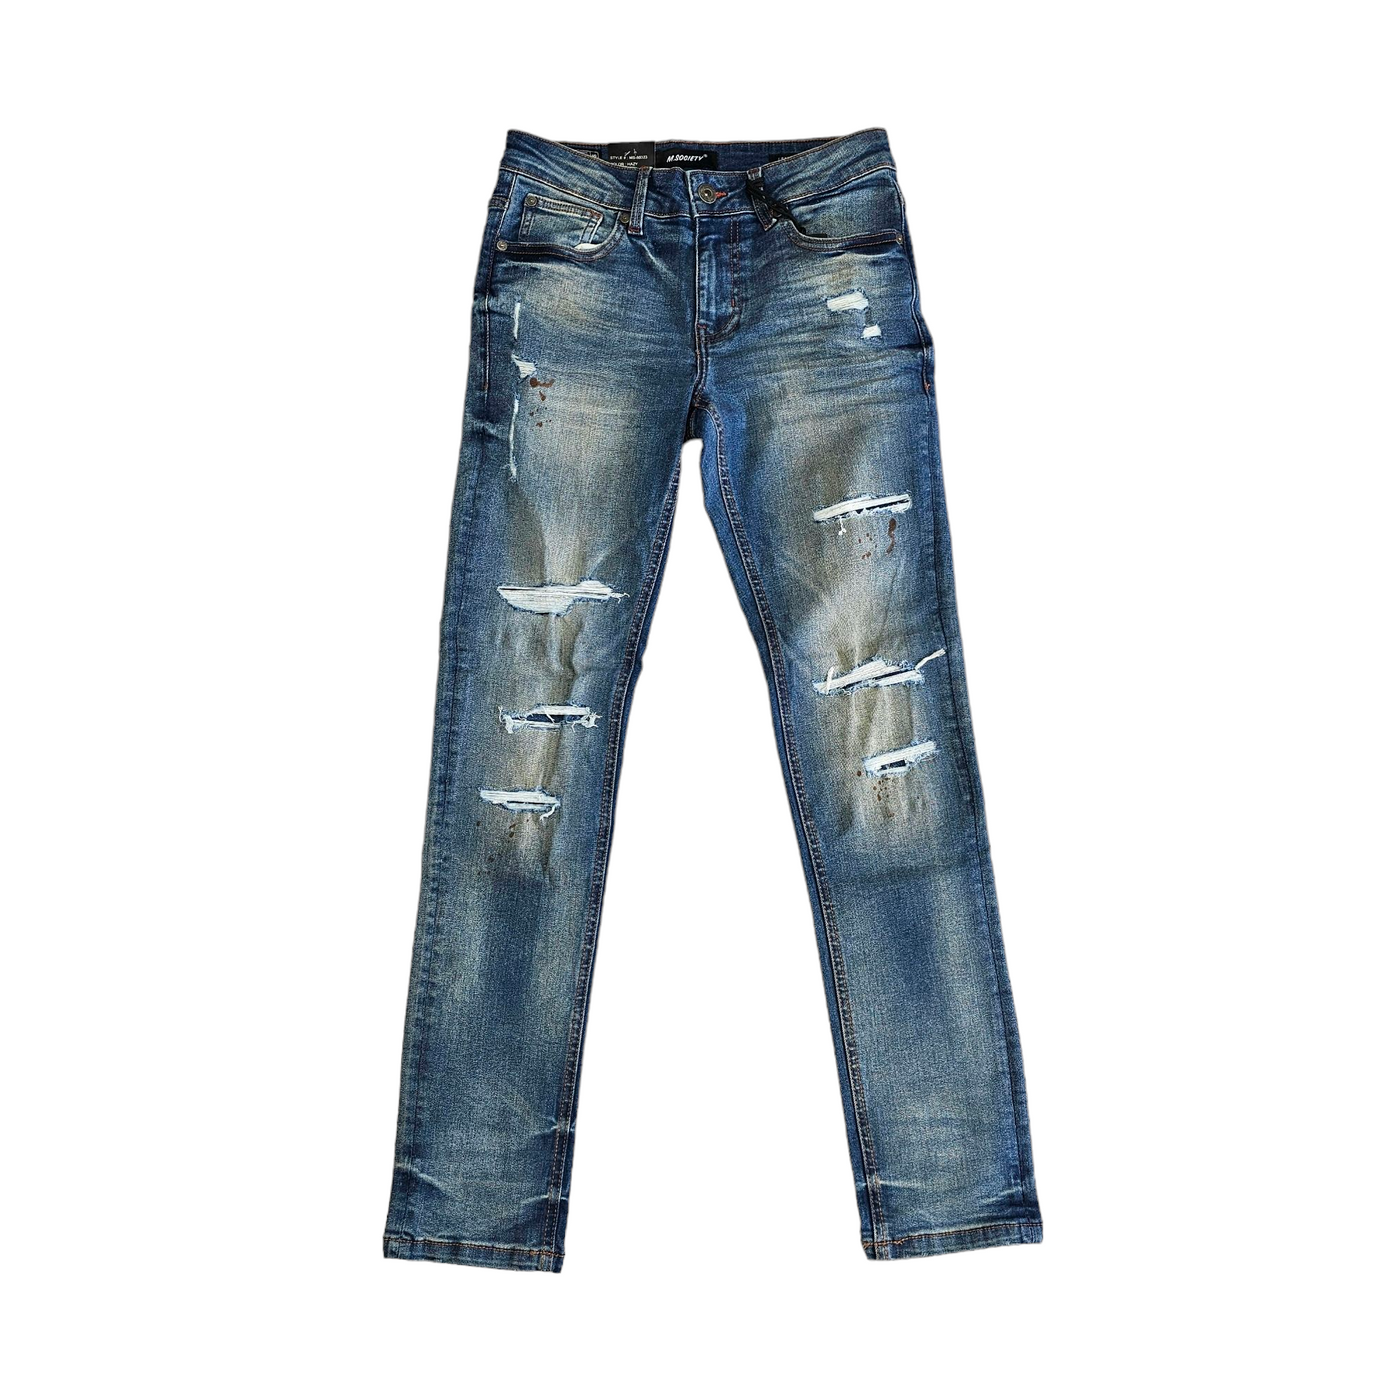 M. Society Men's Skinny Fit Jeans Hazy 80323